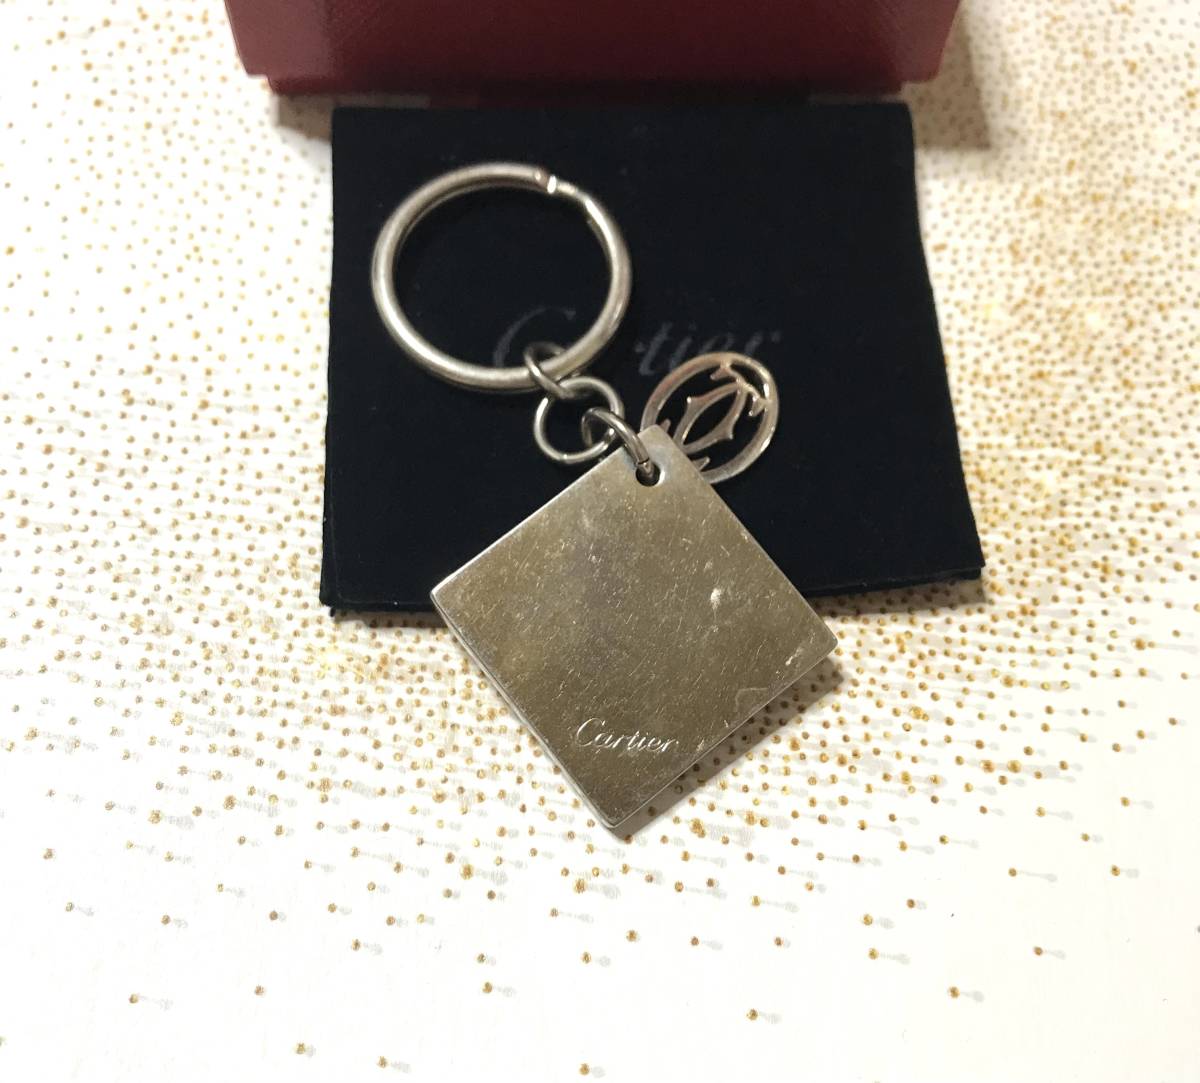  rare |Cartier[ happy birthday ] pink × silver | key ring * key holder | Cartier 